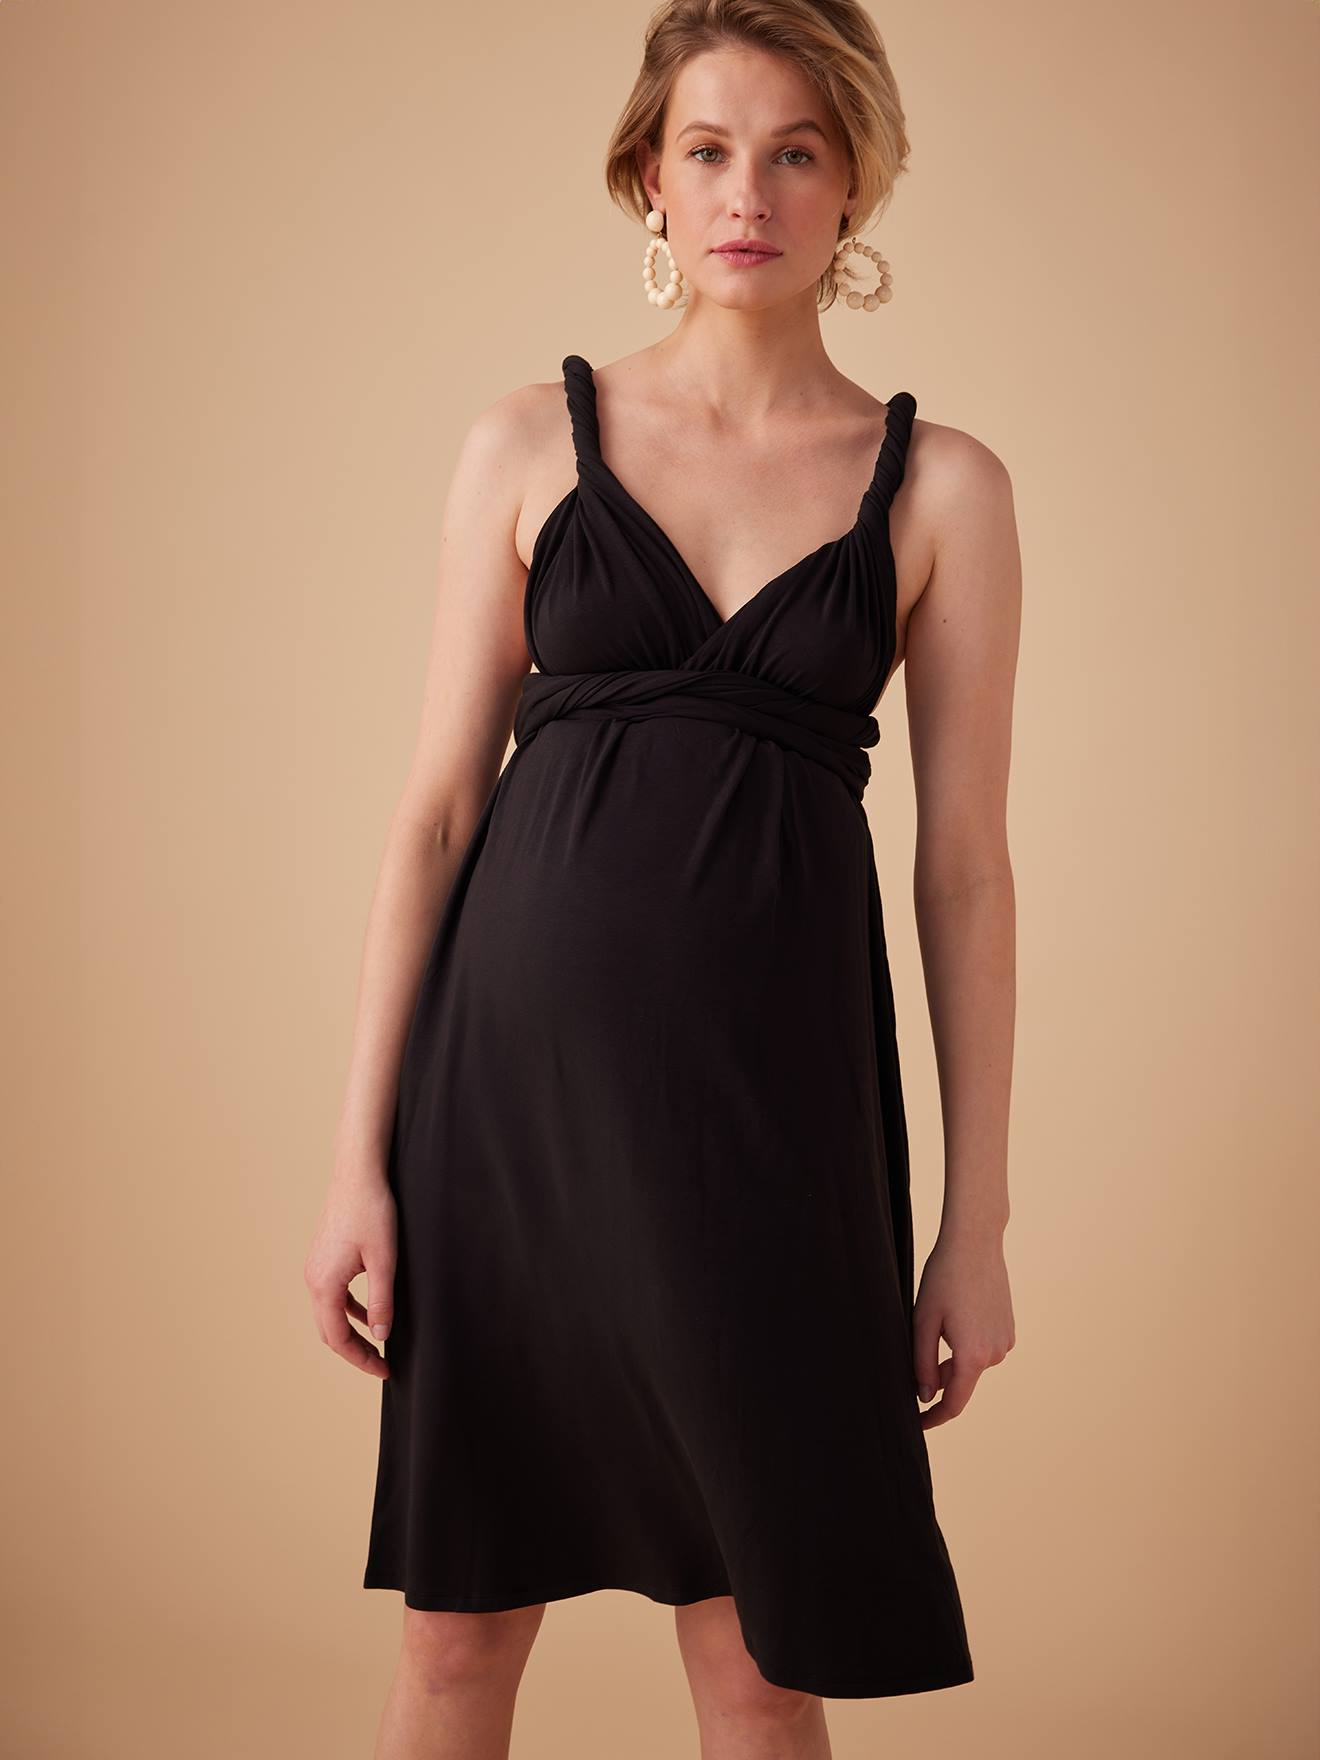 1 Maternity Dress, 7 Looks - Fantastic Dress by ENVIE DE FRAISE black